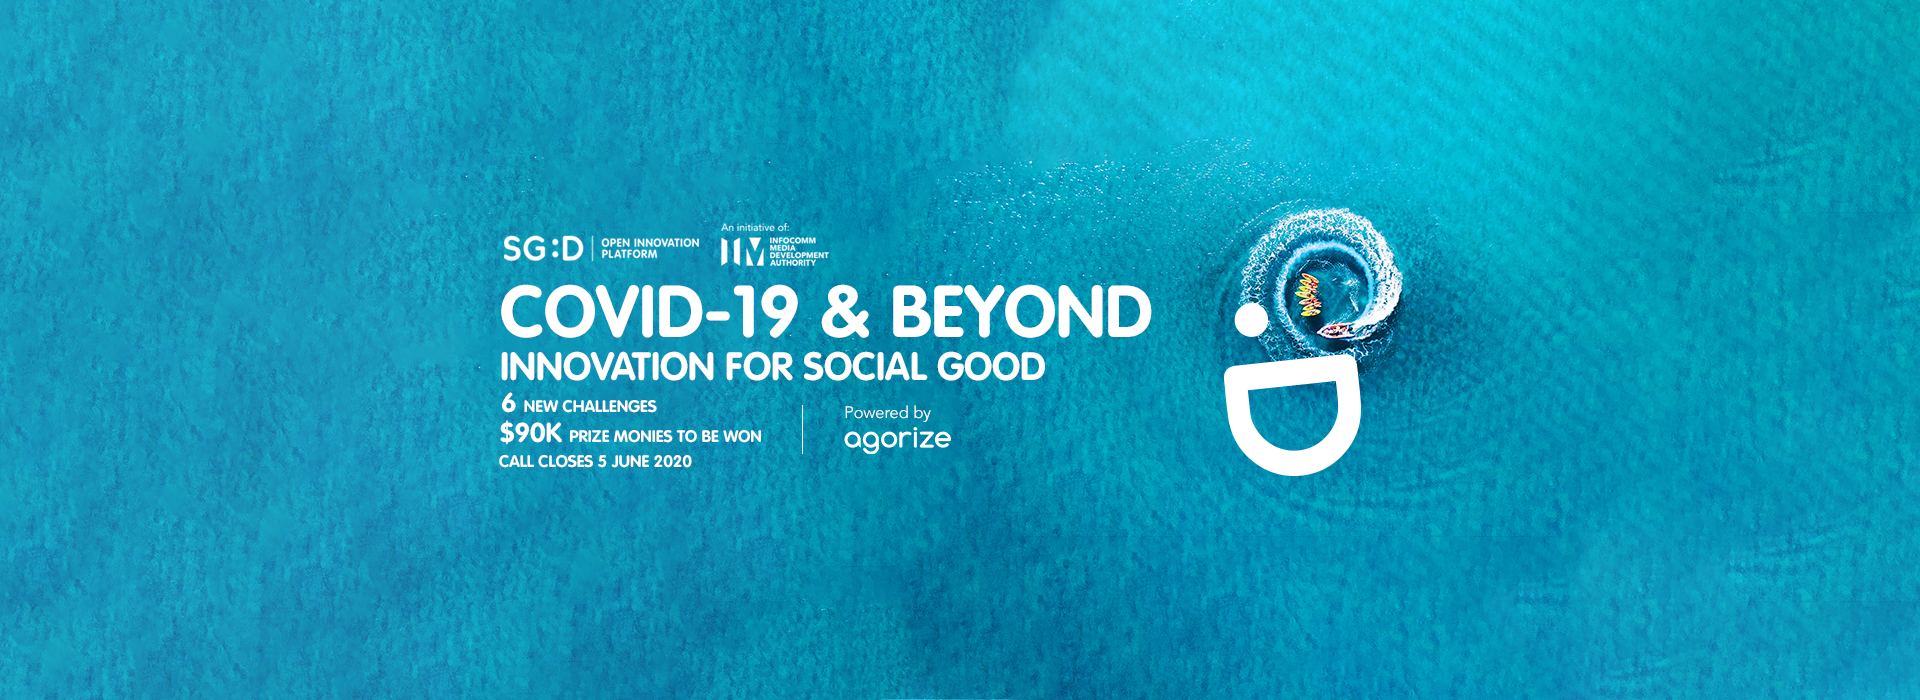 IMDA COVID-19 & Beyond - Innovation for Social Good